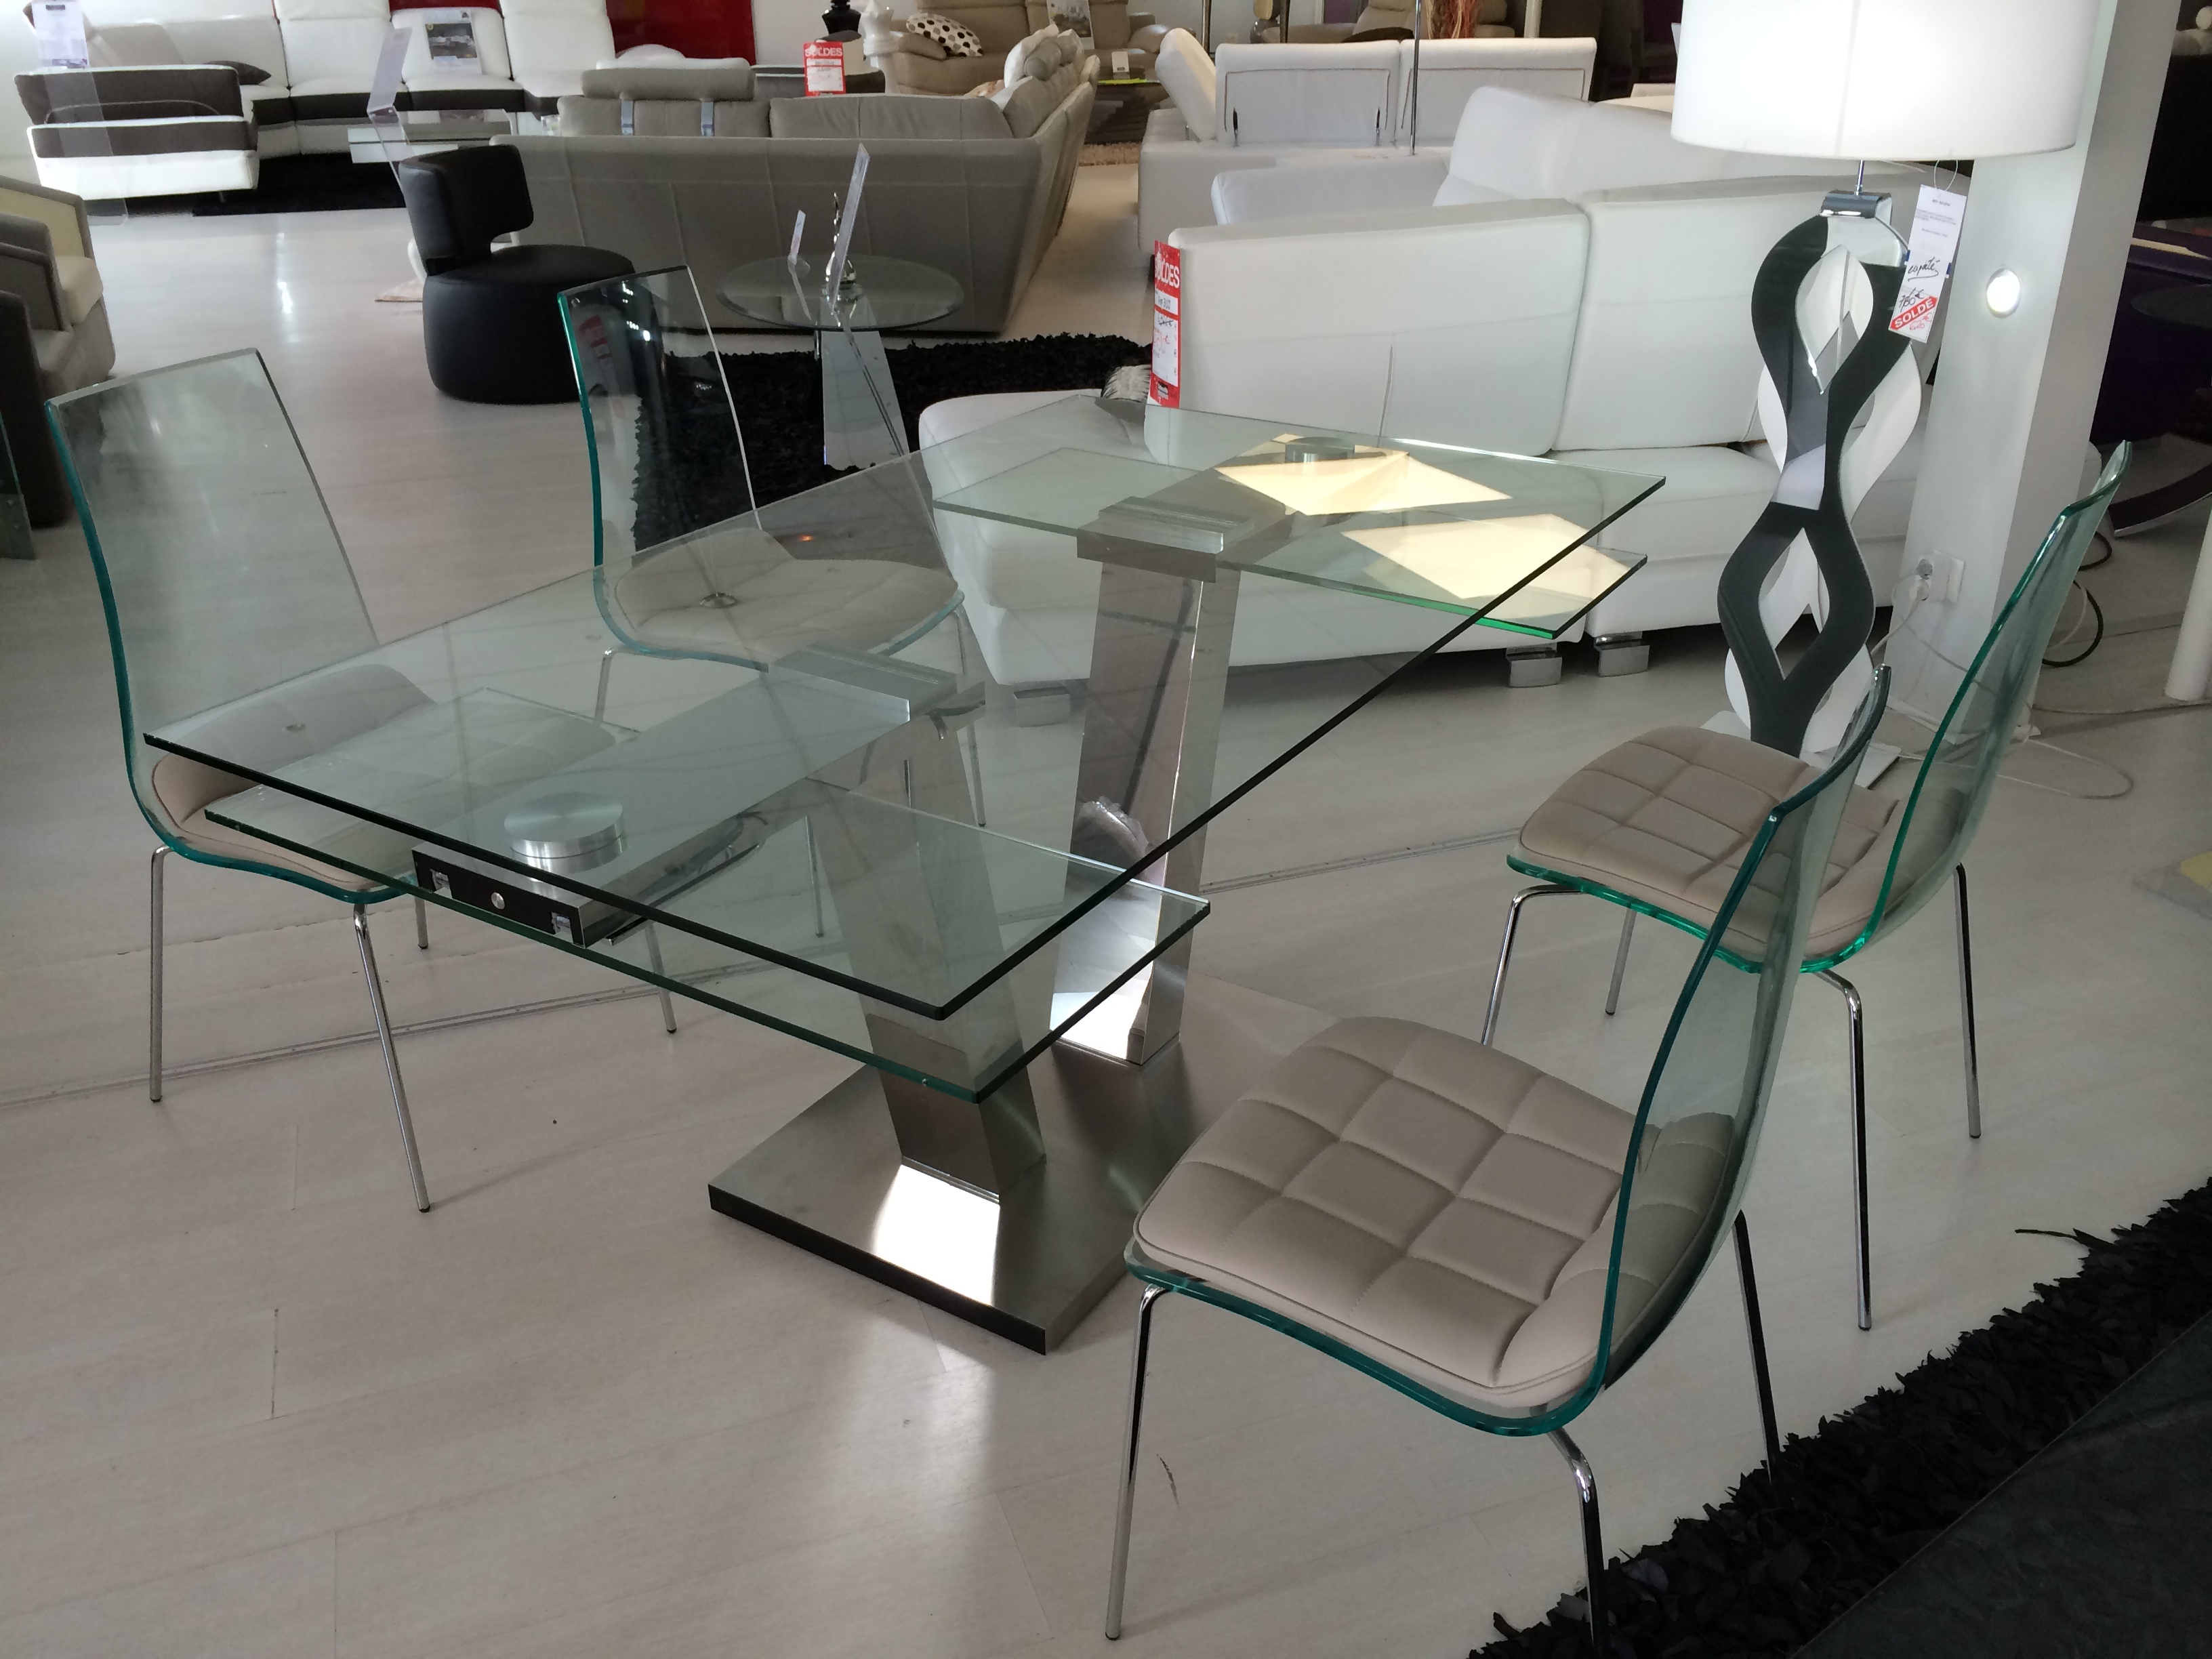 table design extensible verre